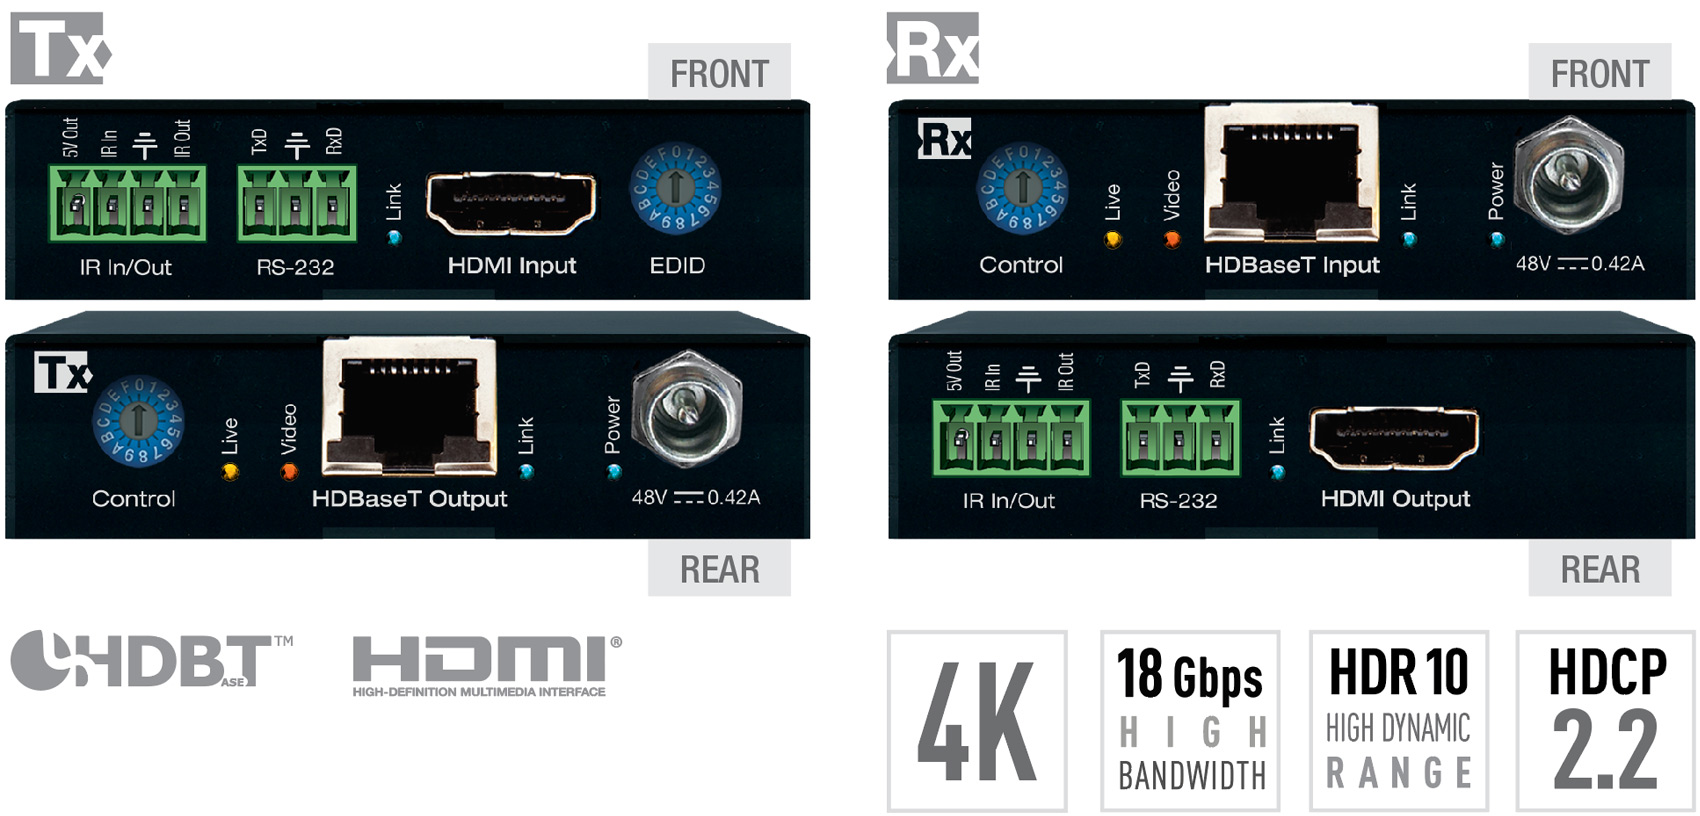 Key Digitals KD-X444S extender kit provides HDMI signal extension 